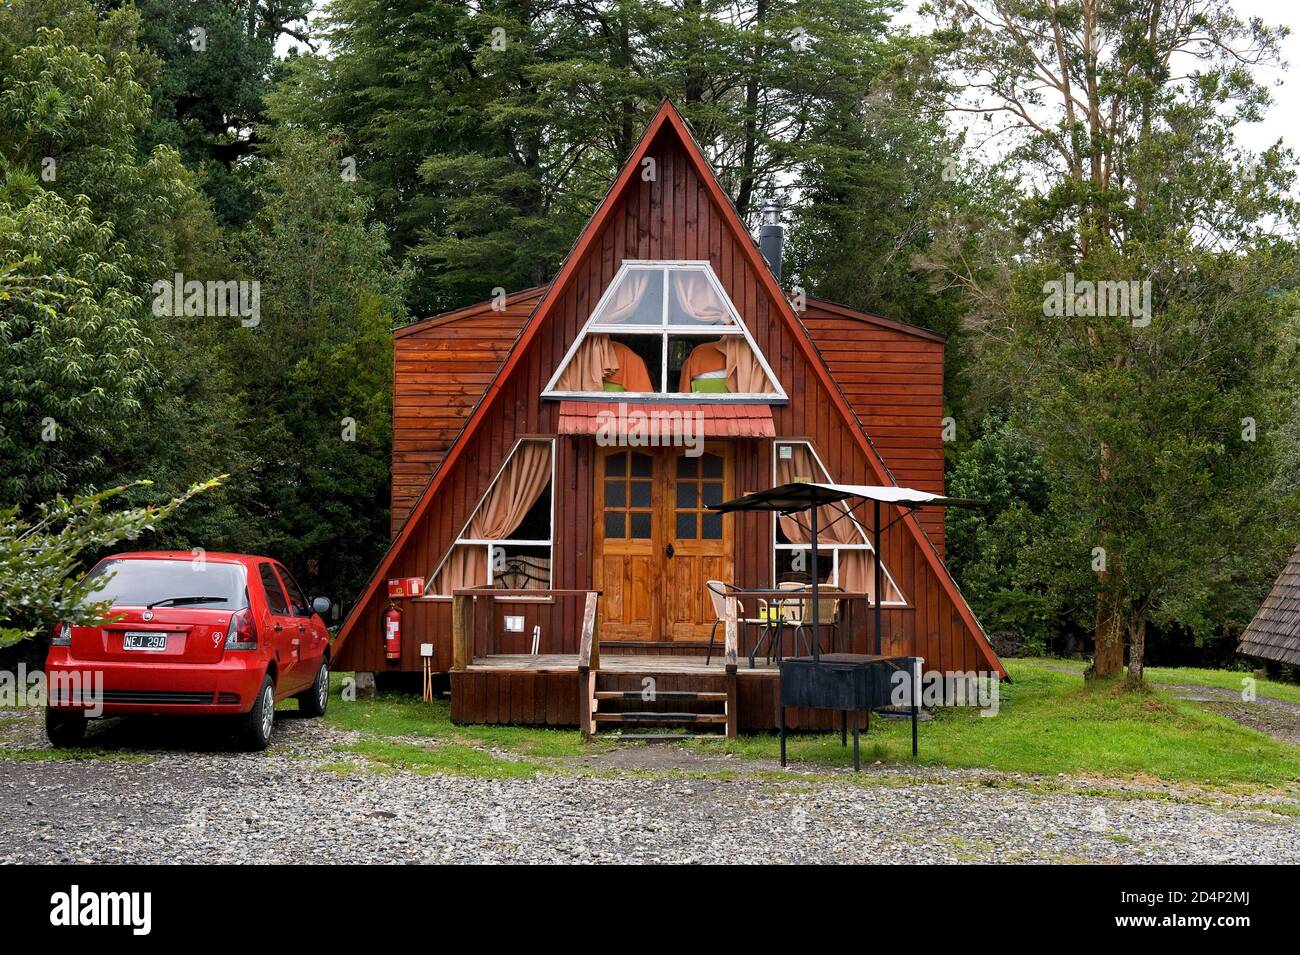 Puyehue Hot Springs/ Chili - Mars 29 2014: Cottage touristique Banque D'Images